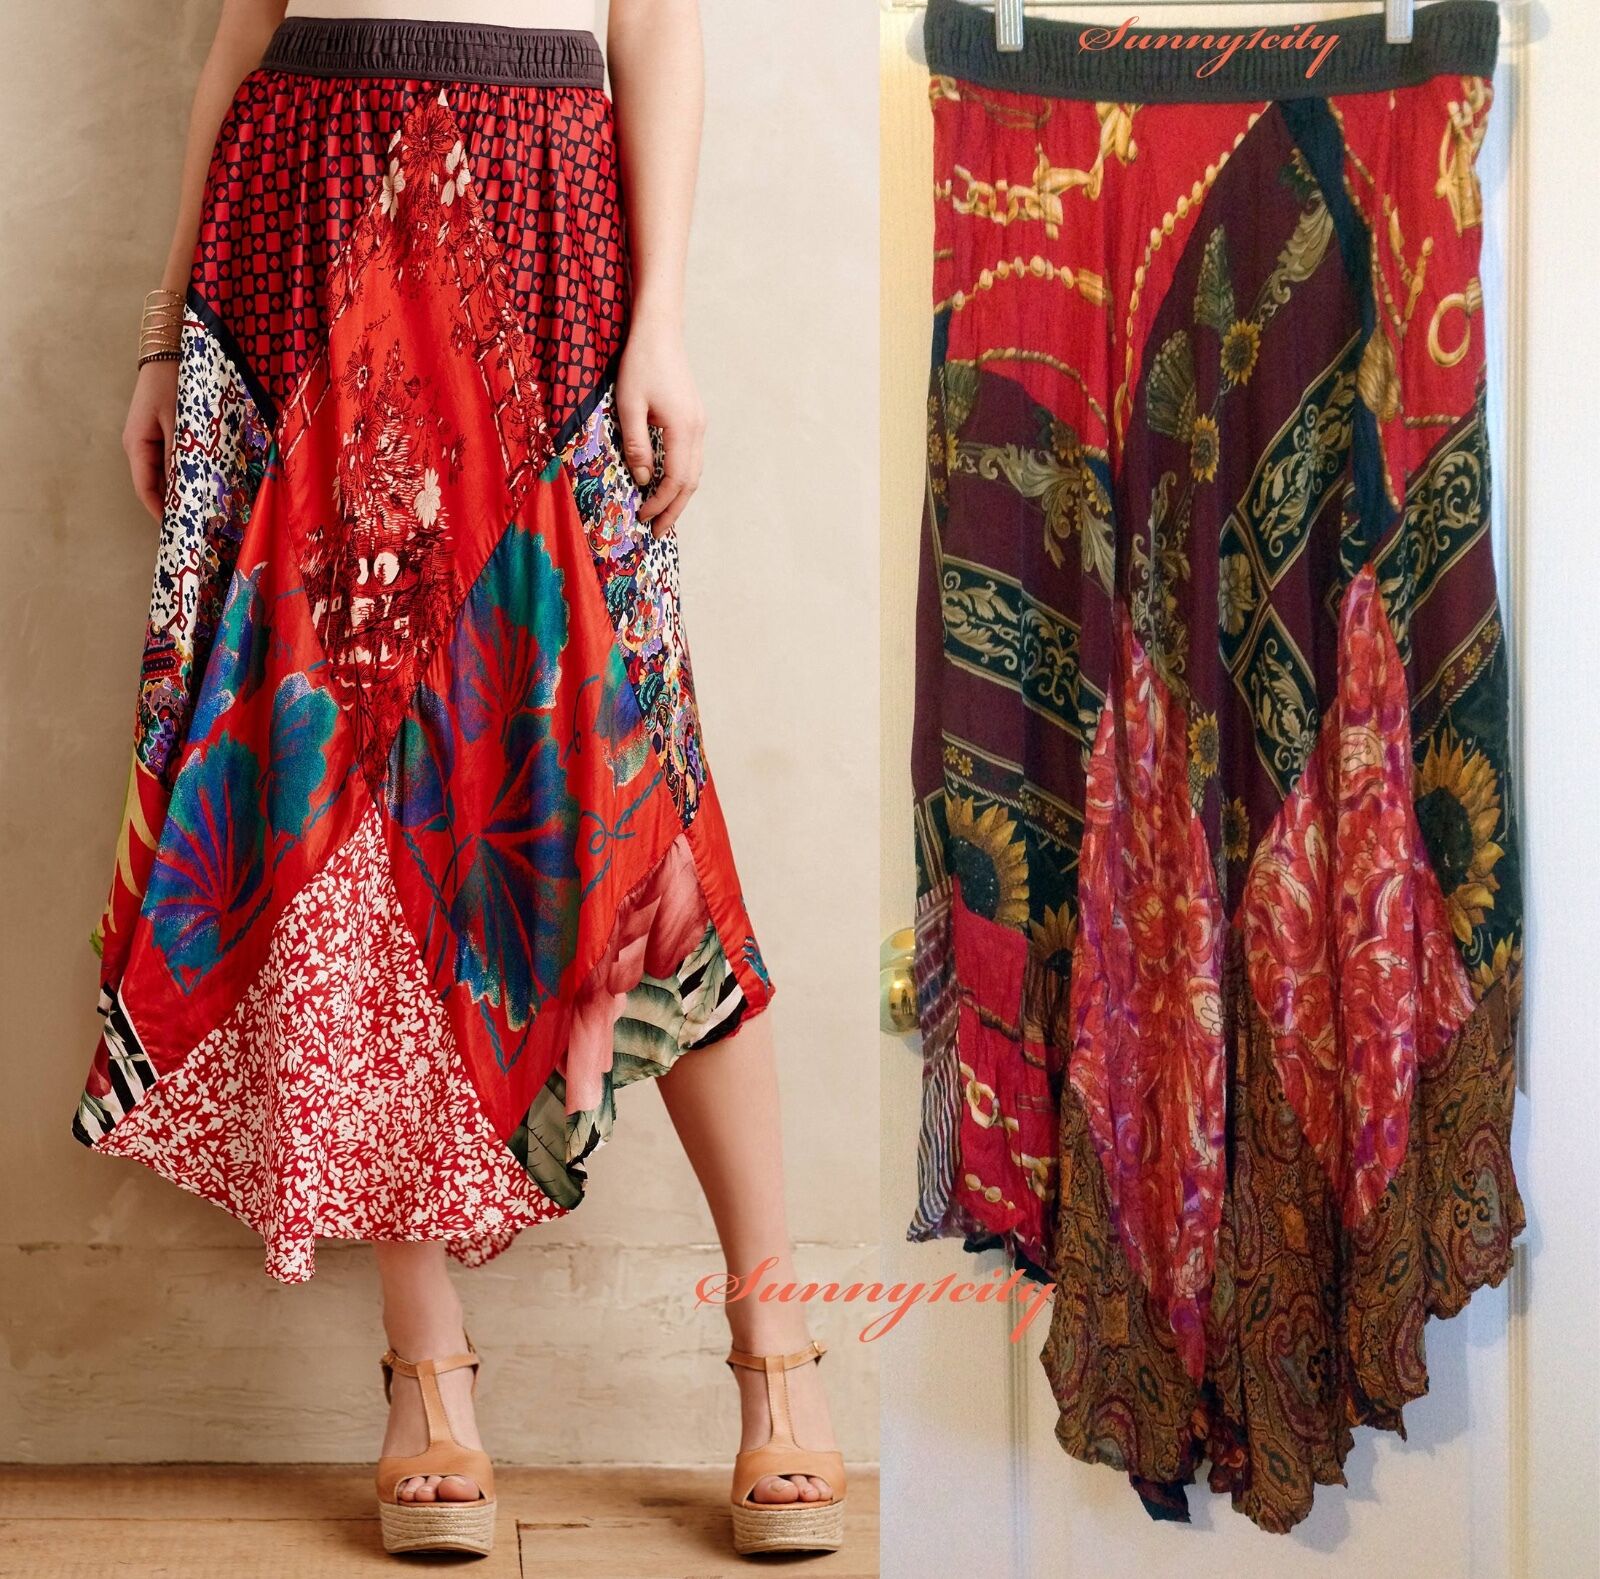 NWT M Anthropologie Vintage Scarf Skirt by Burning Torch, $458 Elegantly Flowy